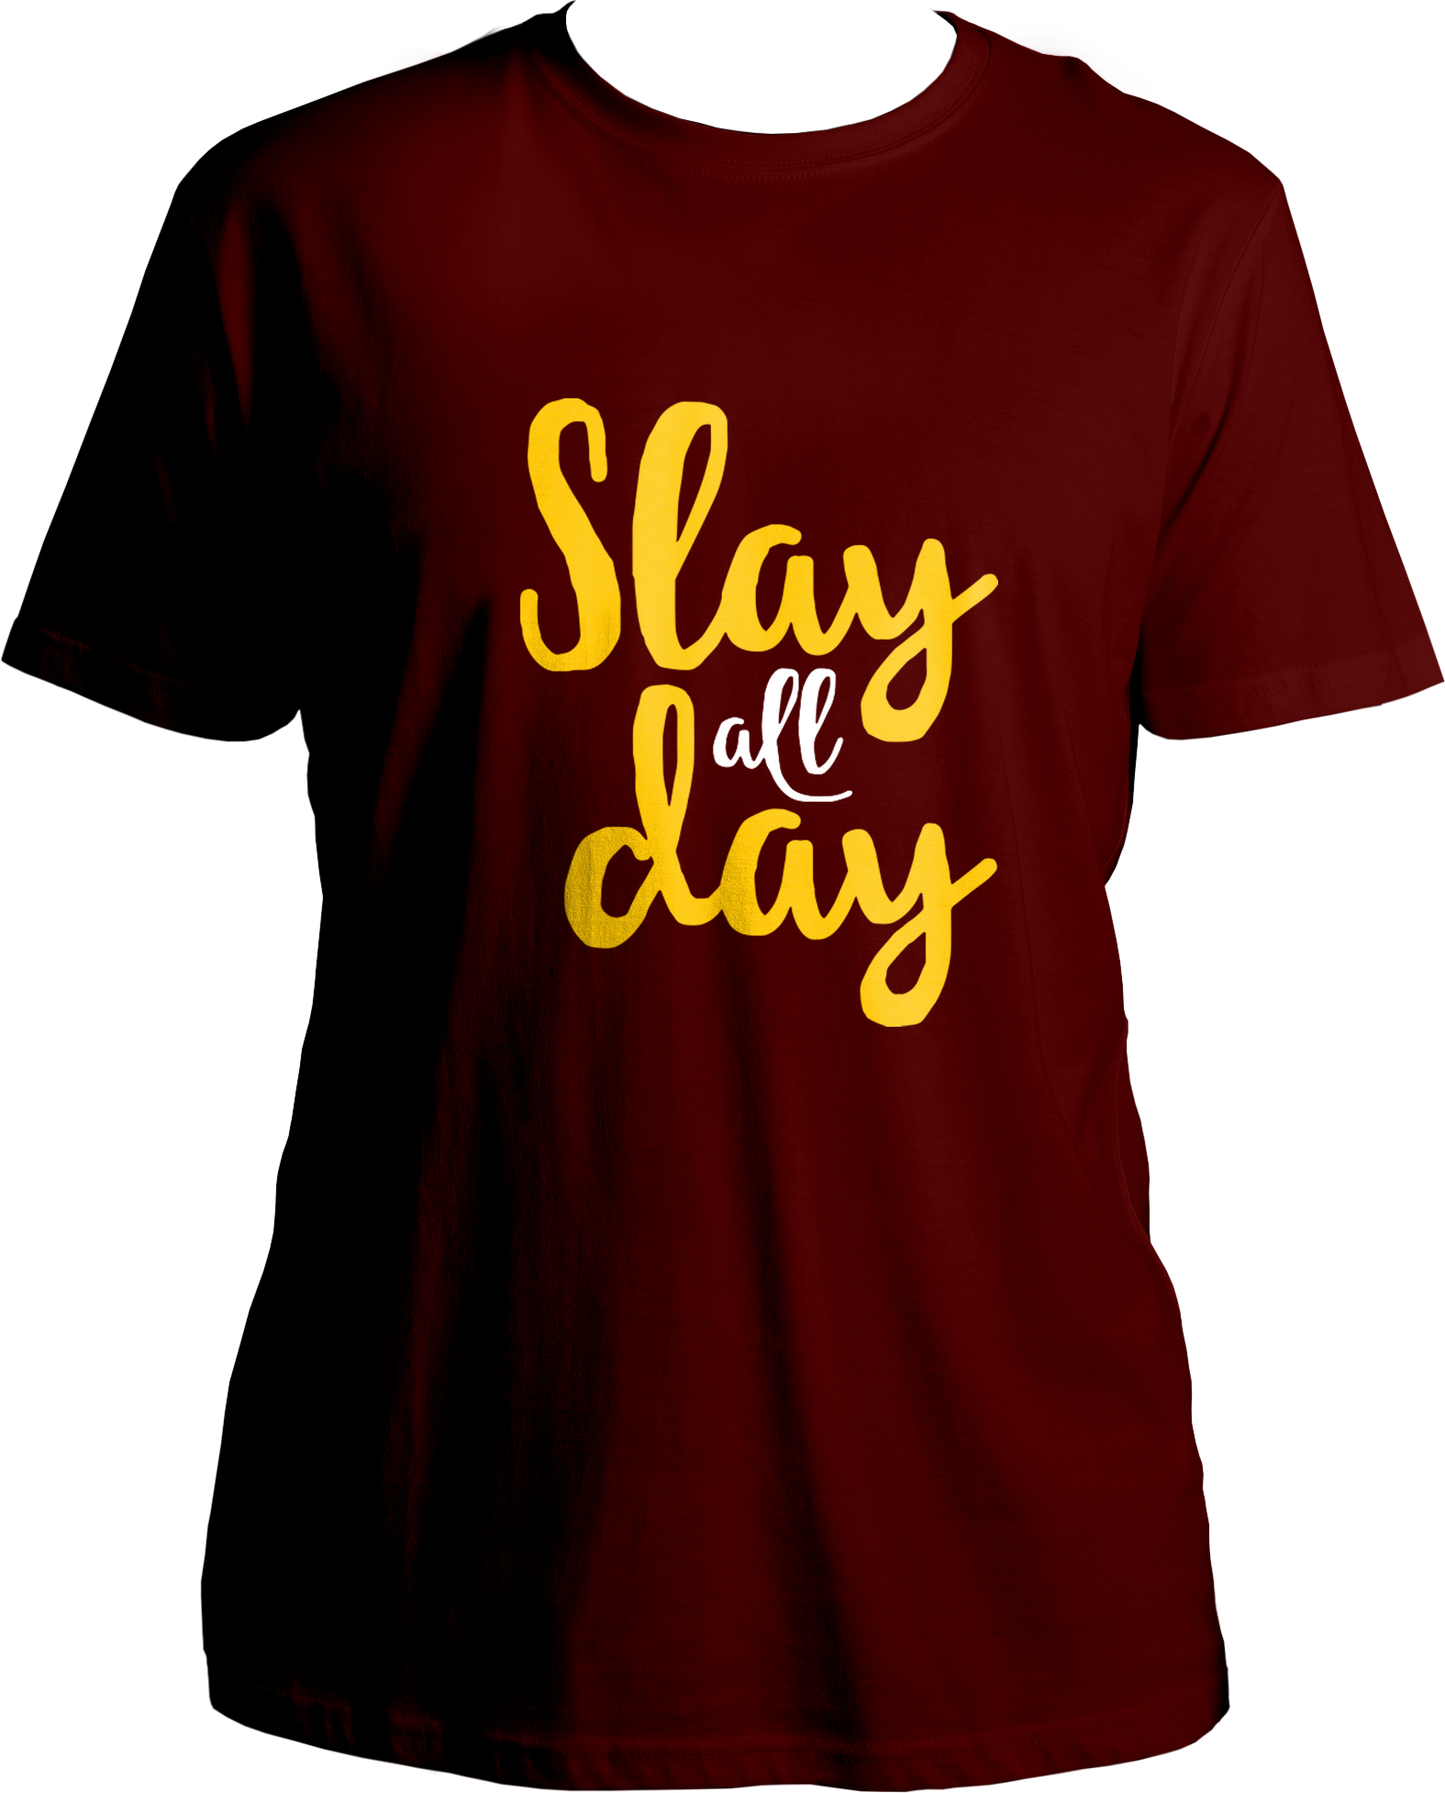 Slay All Day Unisex T-Shirts